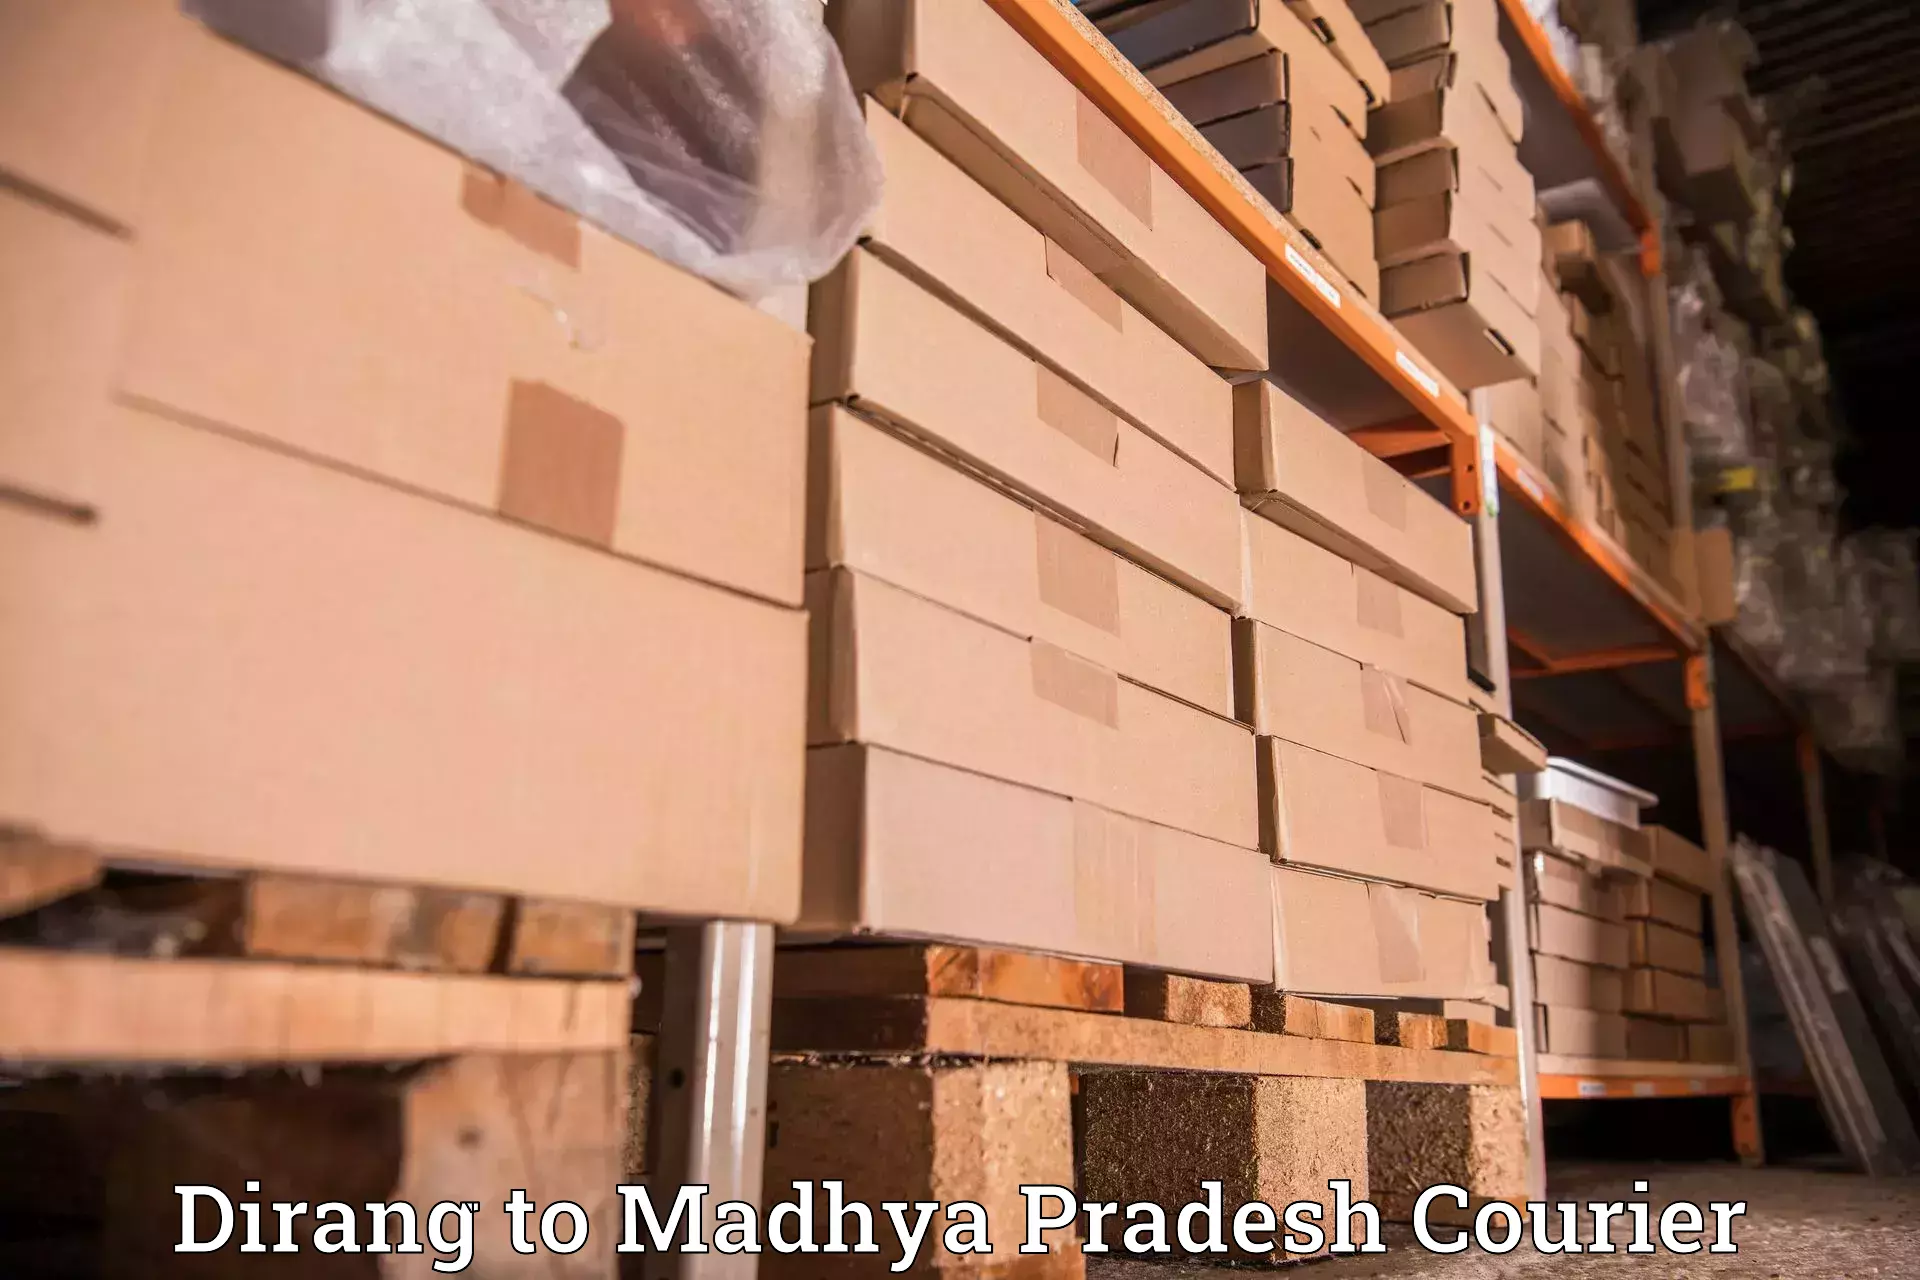 Courier service efficiency Dirang to Maheshwar